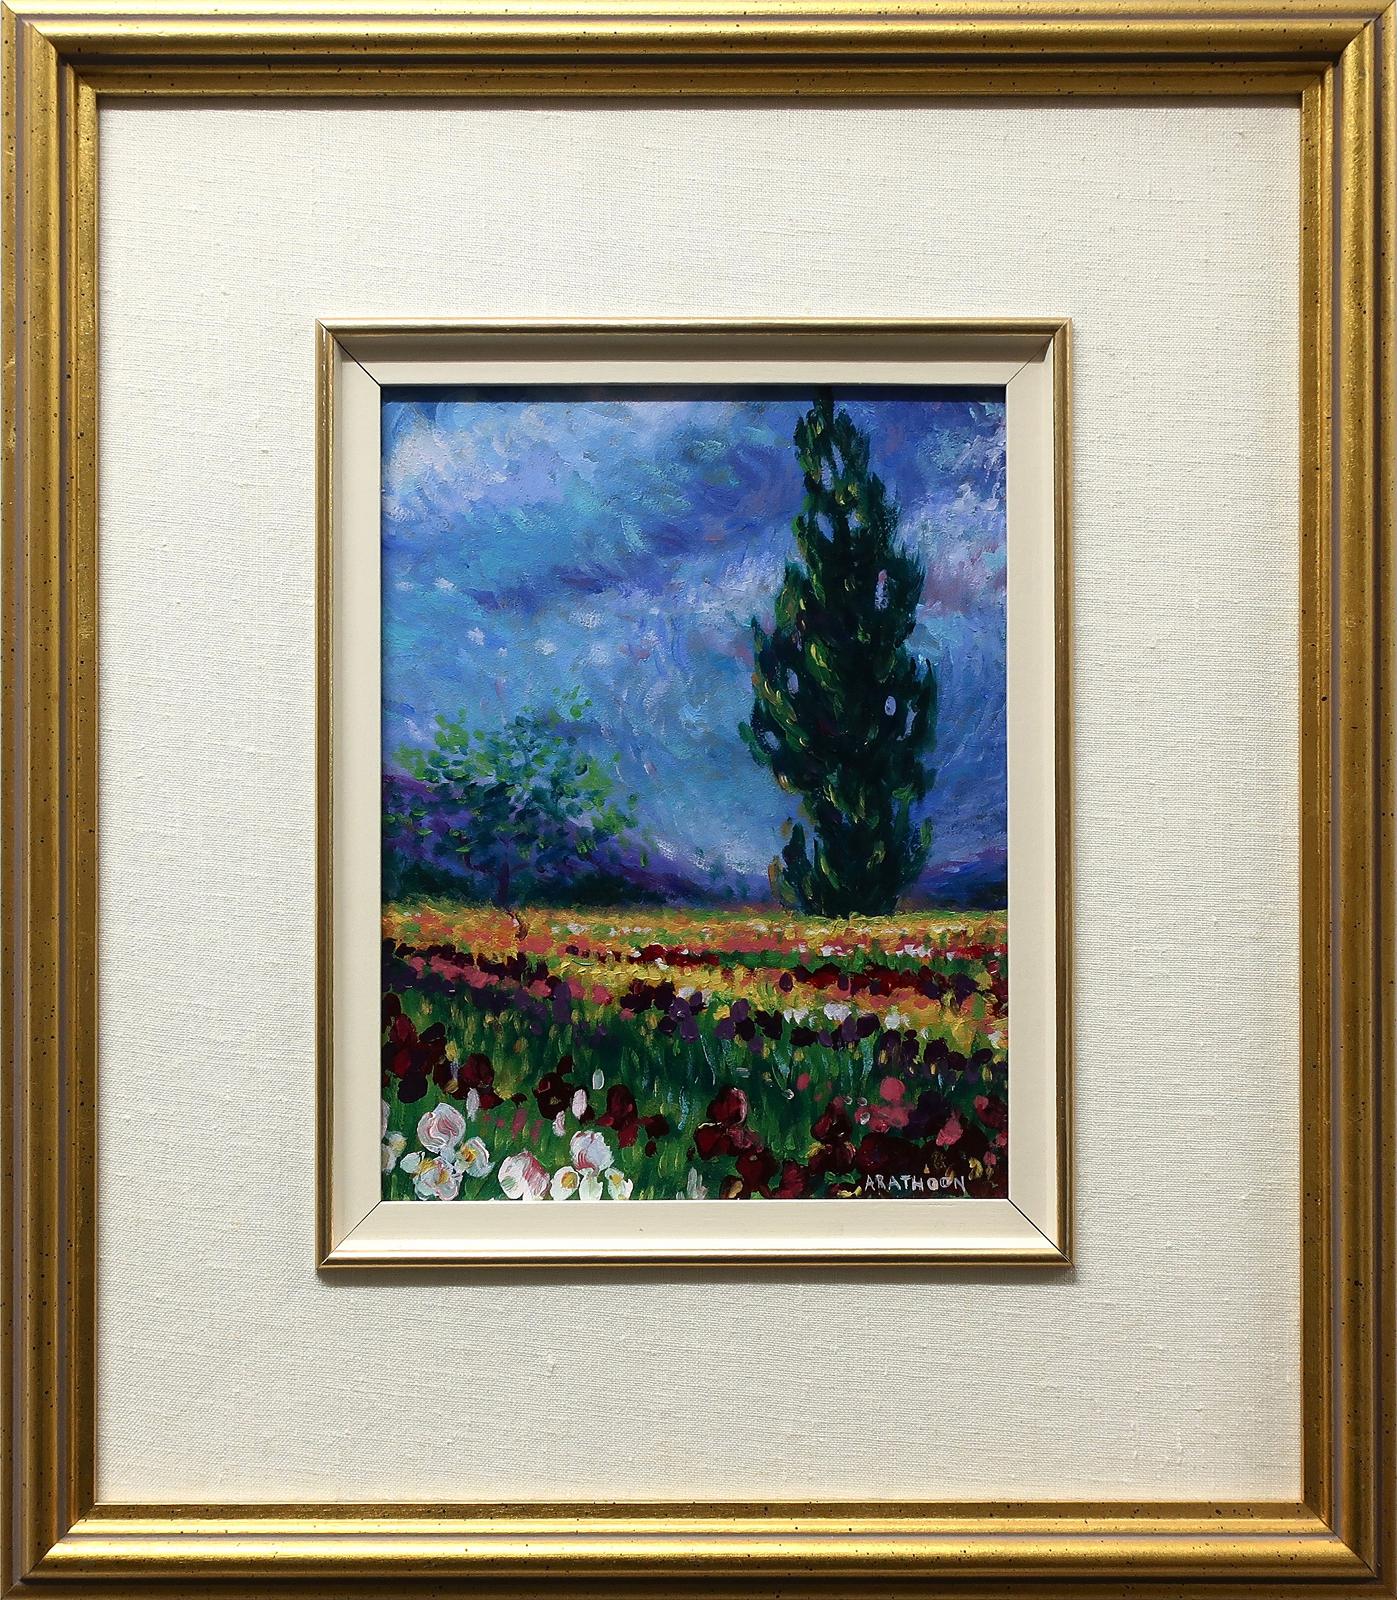 David Arathoon (1959) - Irises Under A French Sky